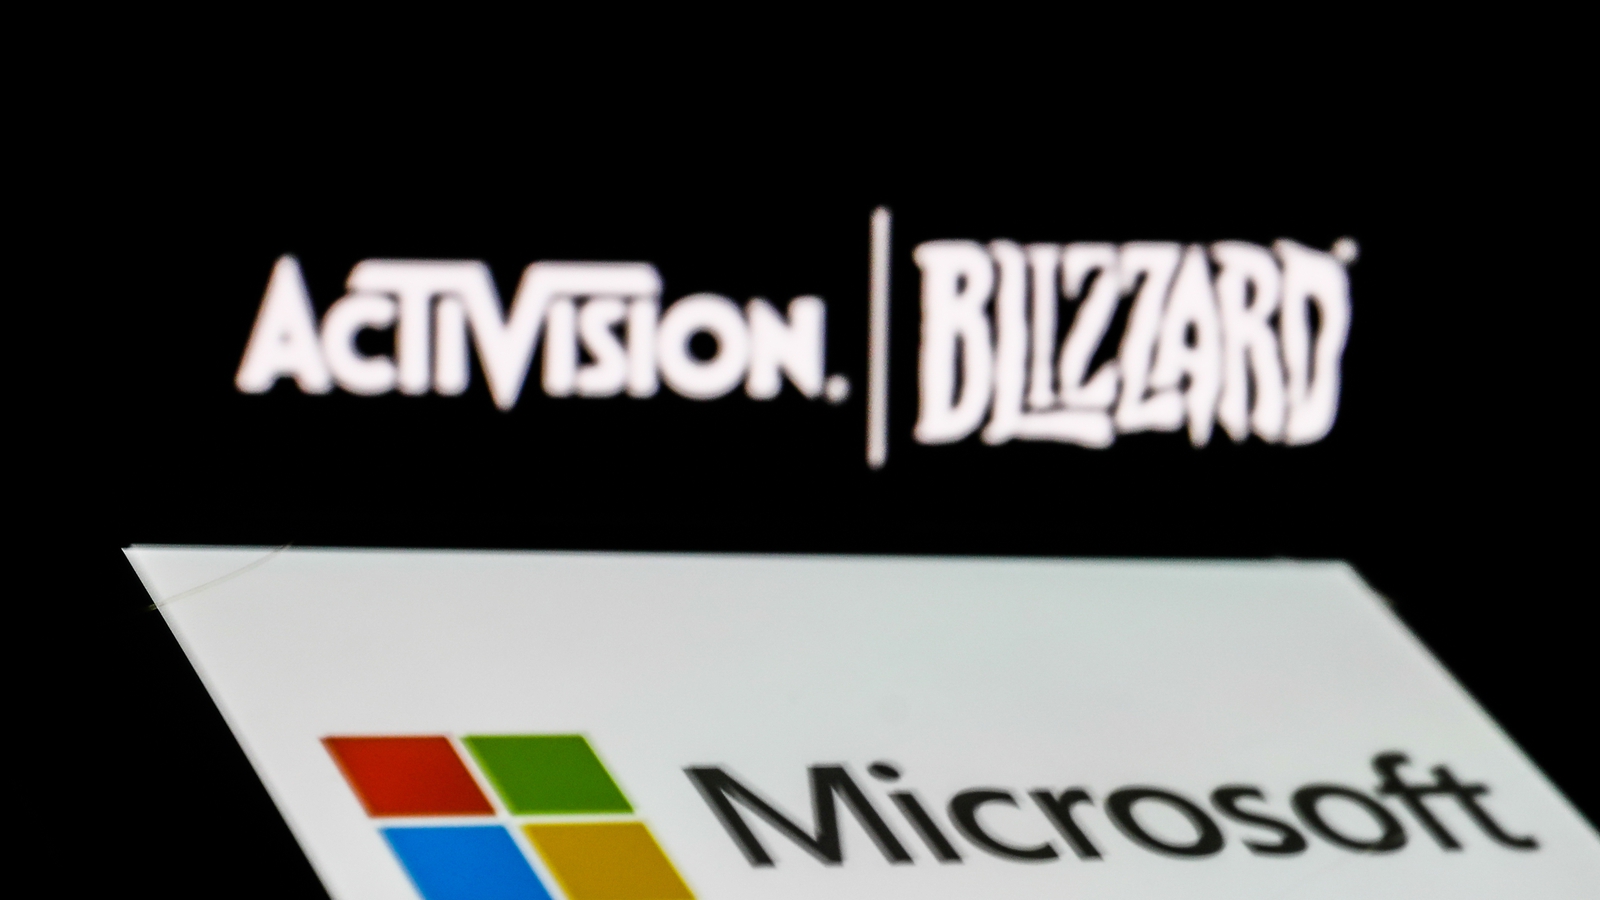 CMA provisionally approves Microsoft's Activision Blizzard